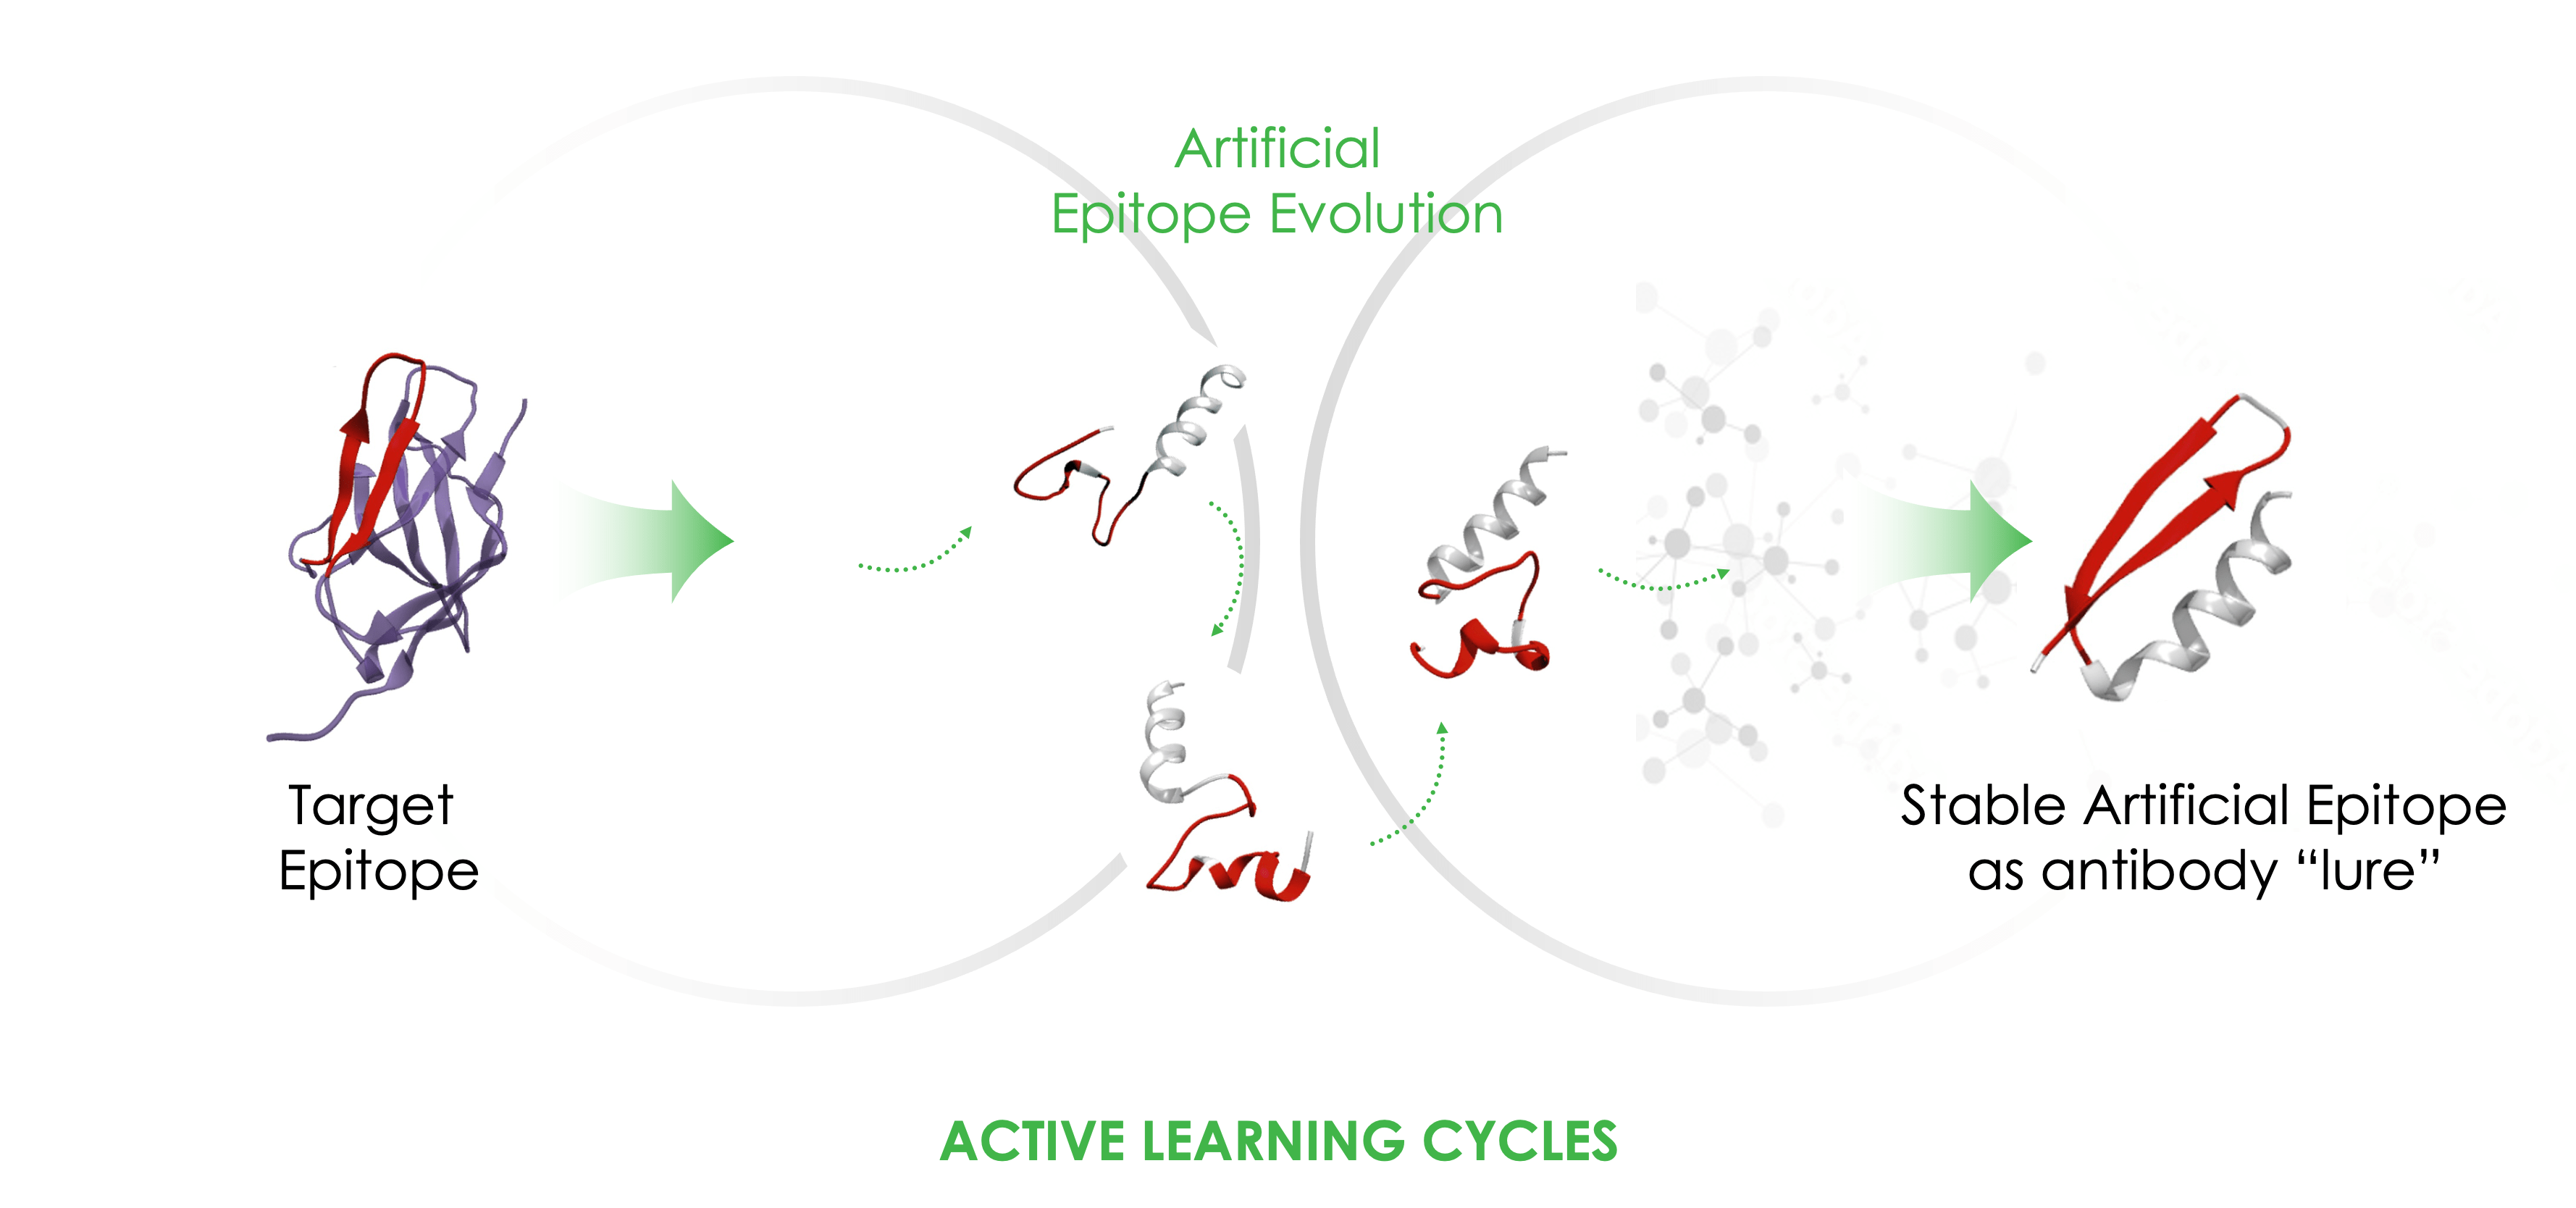 Artificial epitope evolution diagram shows target epitope becoming a stable artificial epitope as antibody 'lure'